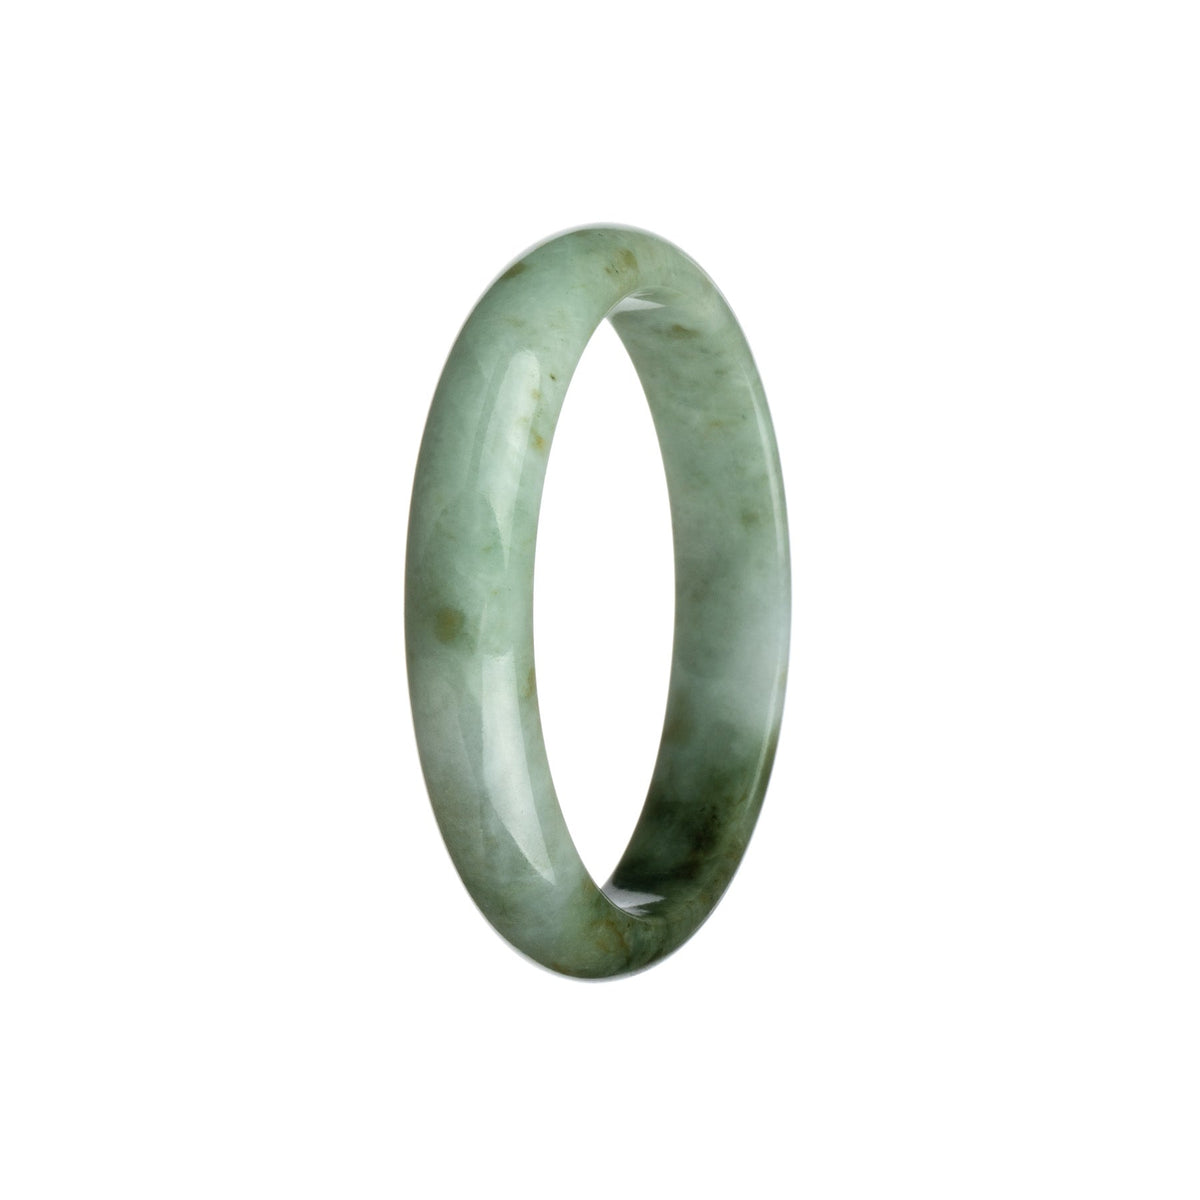 Authentic Grade A Grey with Olive Green Burma Jade Bracelet - 58mm Half Moon